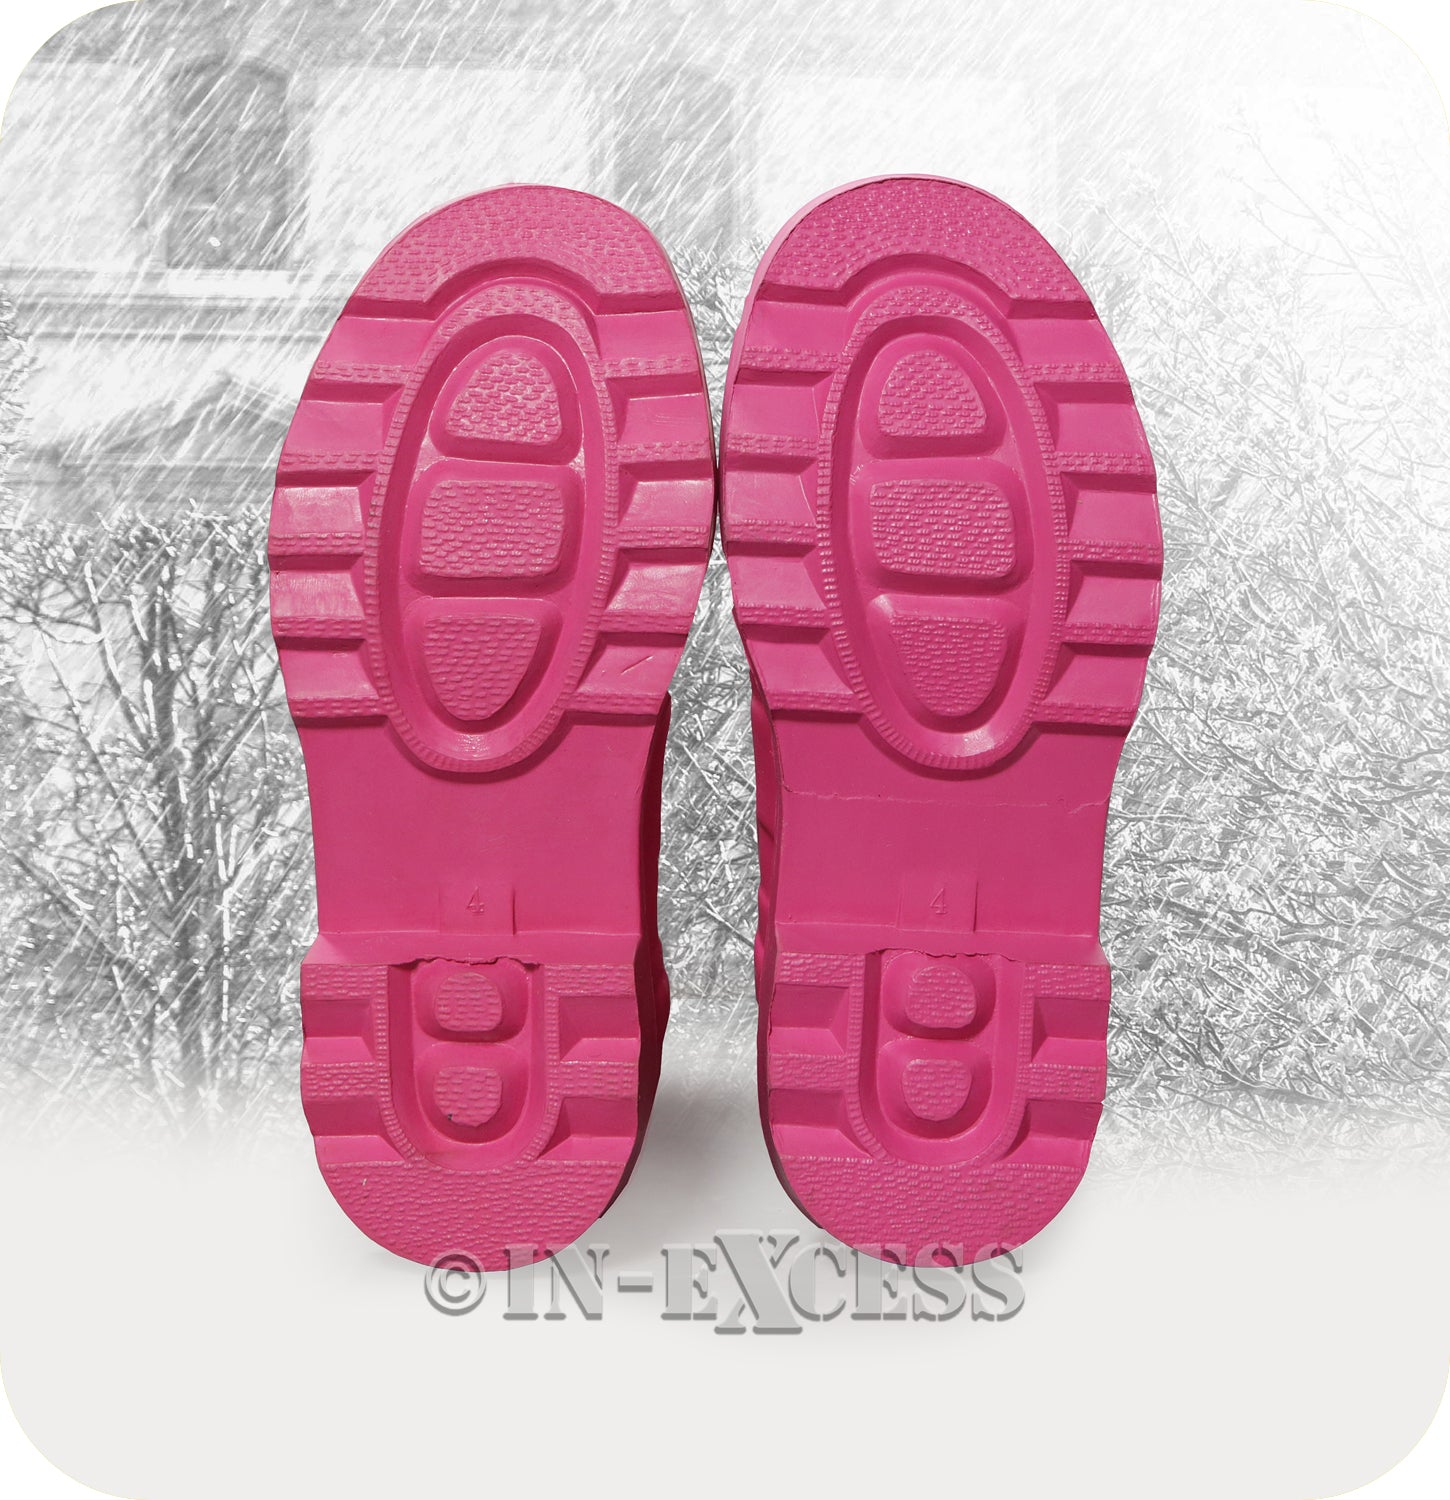 Town & Country Stylish Adjustable Deep Tread Wellington Walking Boots - Pink